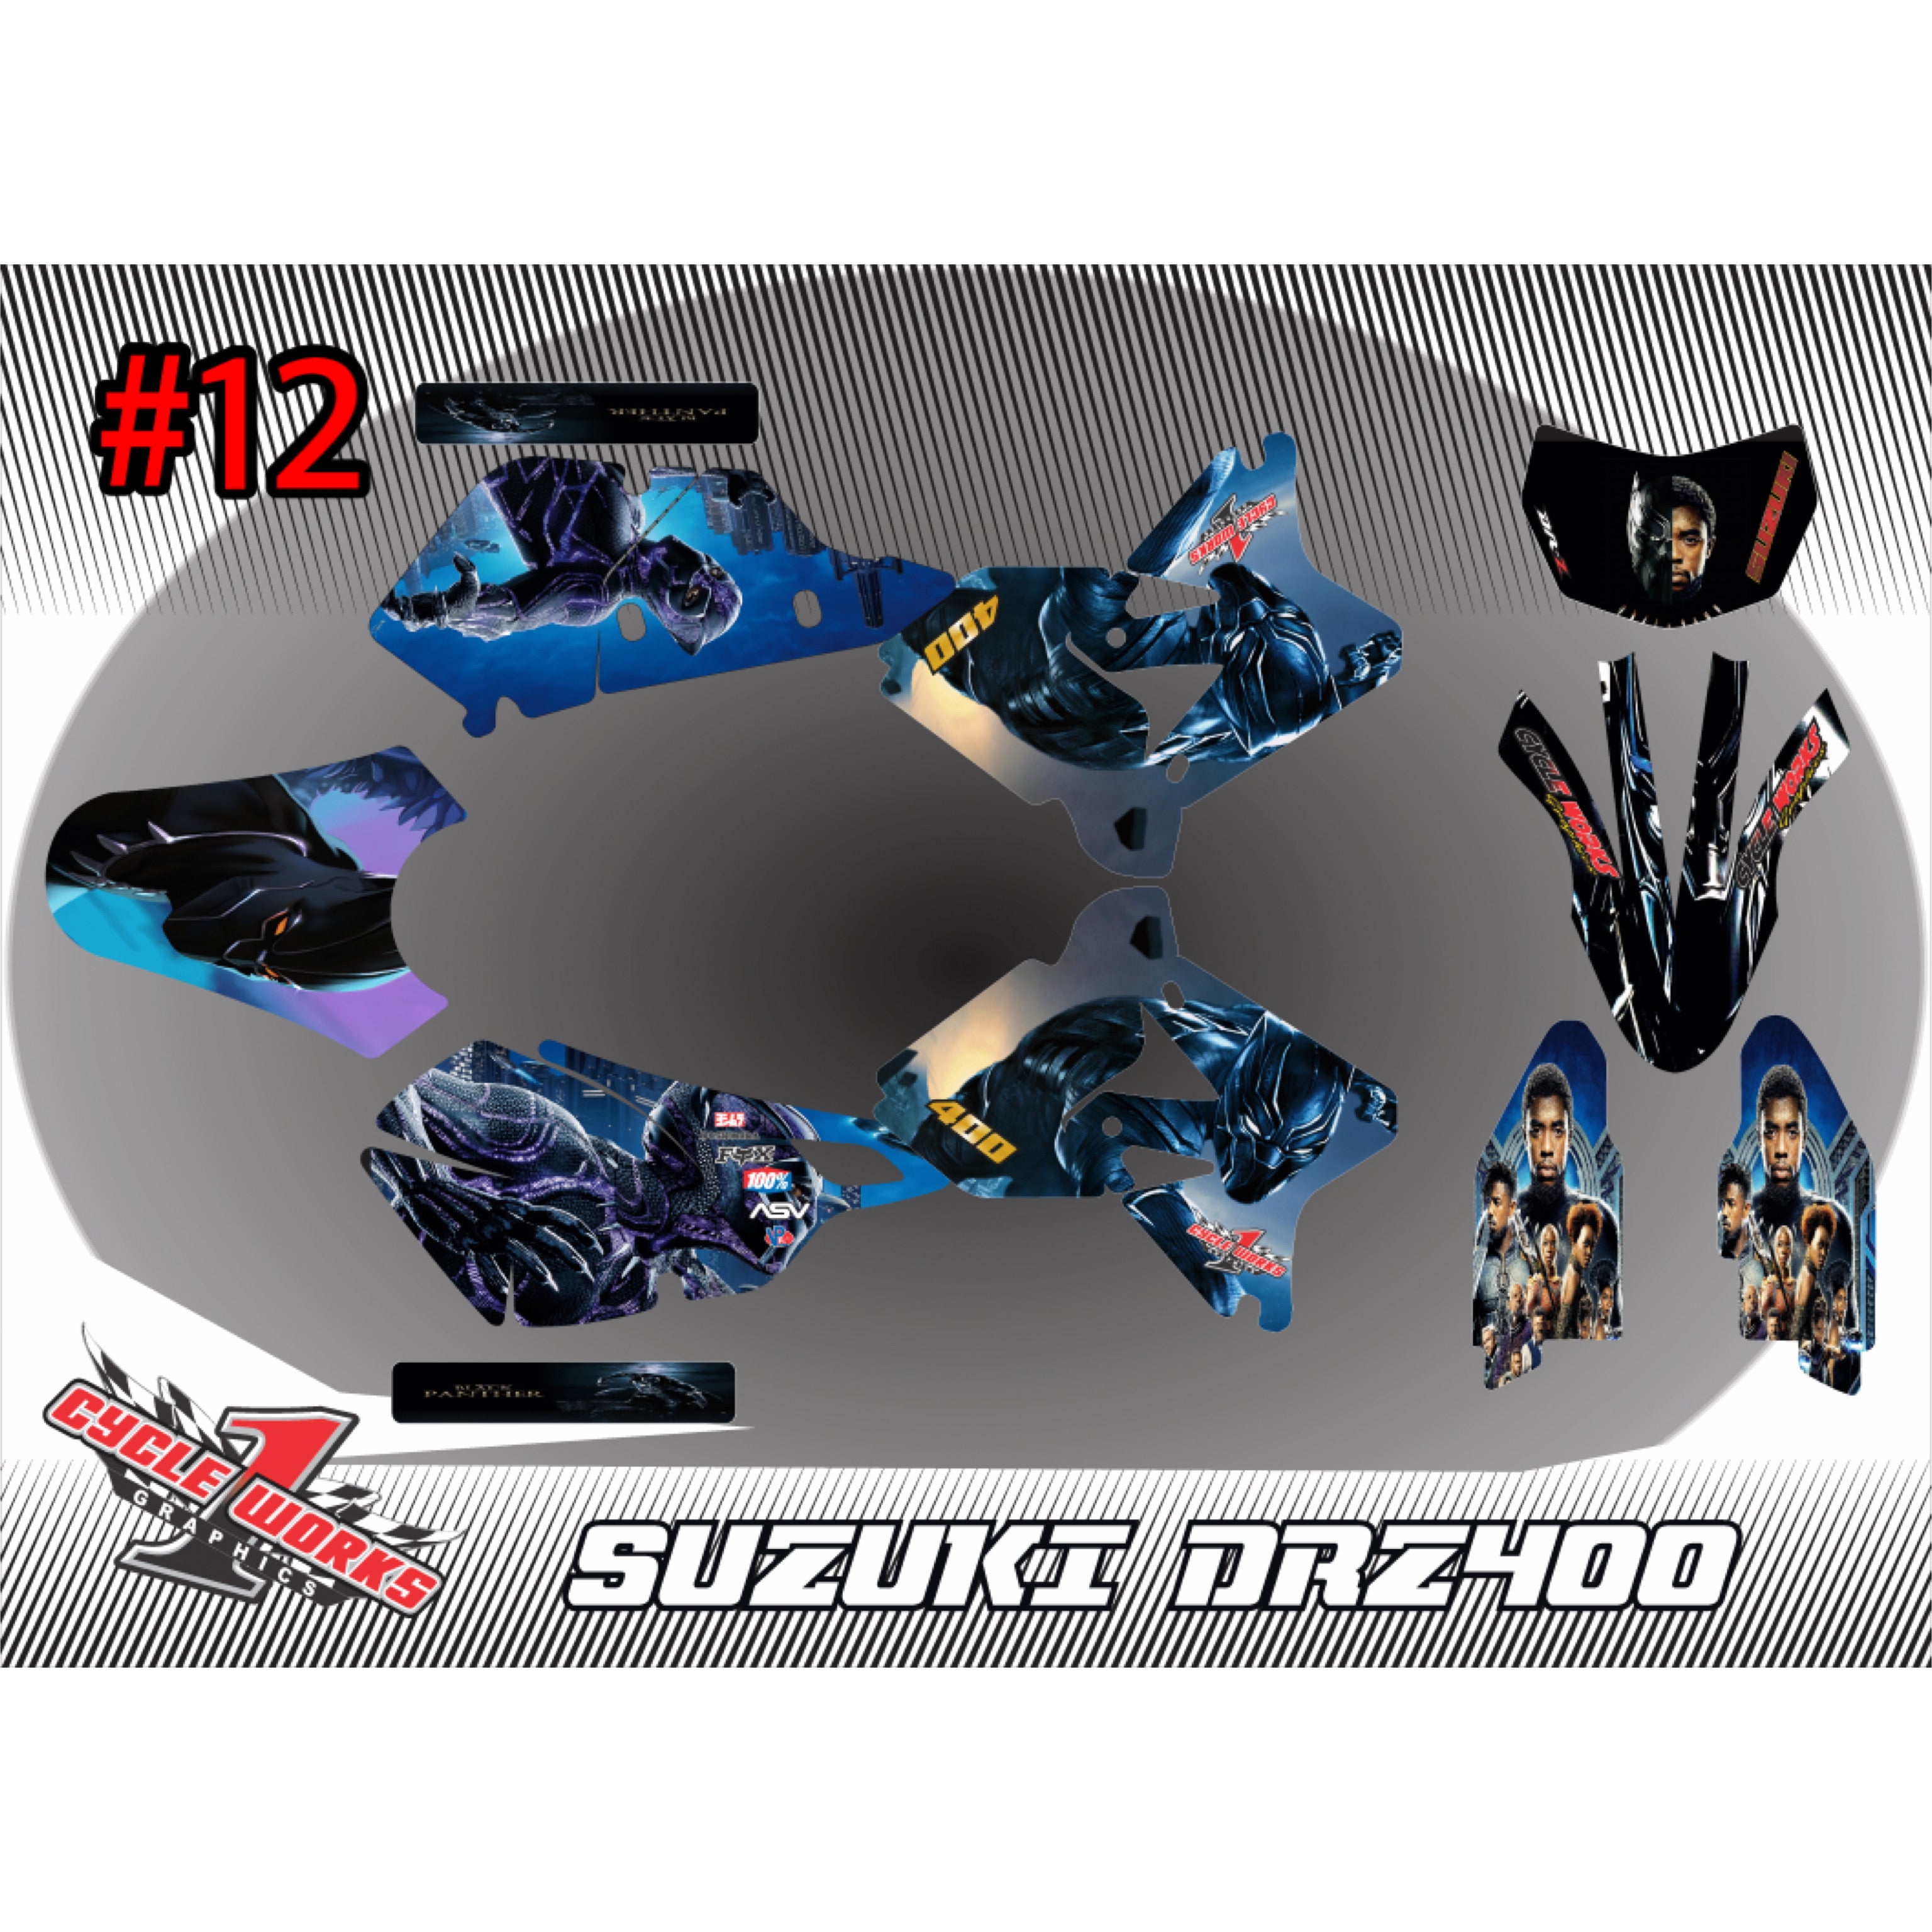 Drz400 anime graphic kit